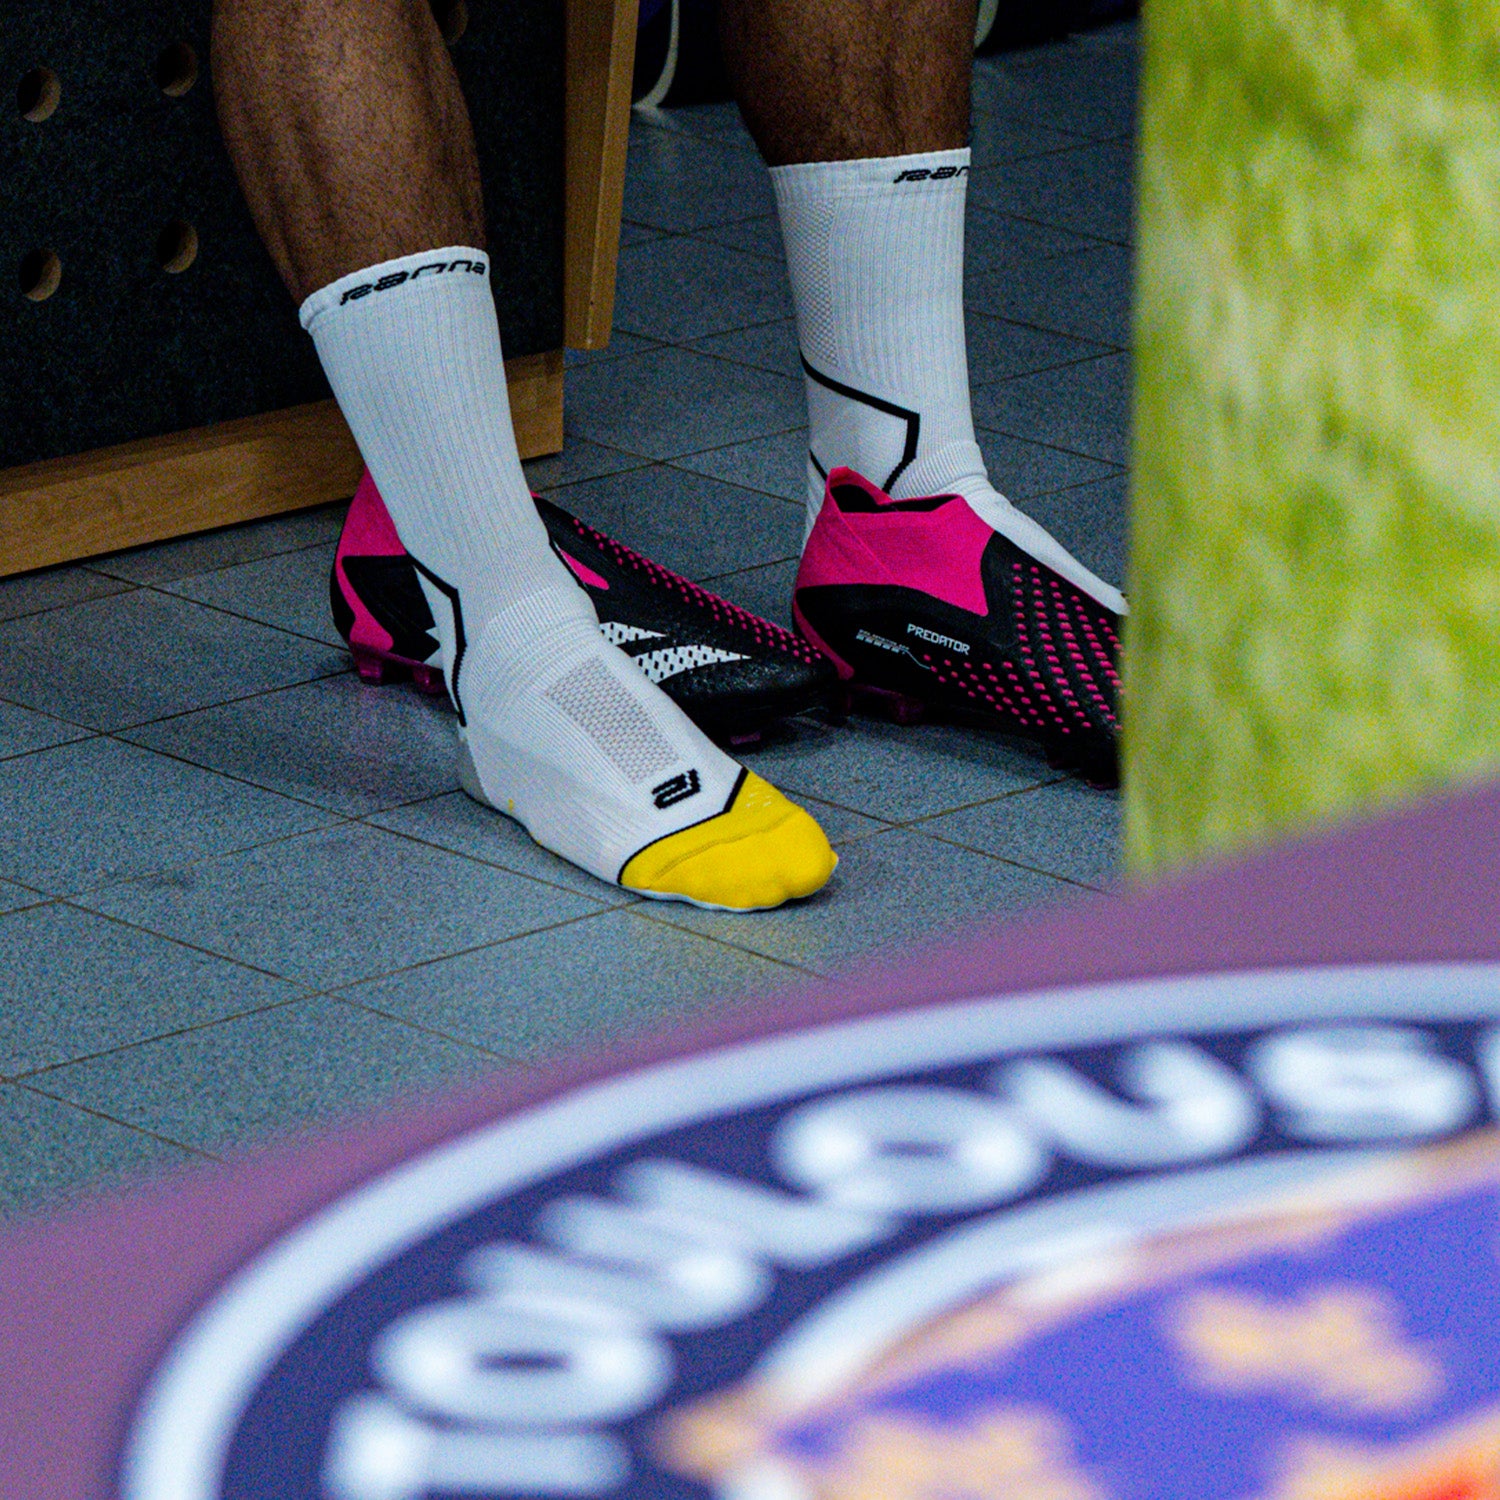 Photo of RANNA anti-slip performance socks in the locker room of the Toulouse football club